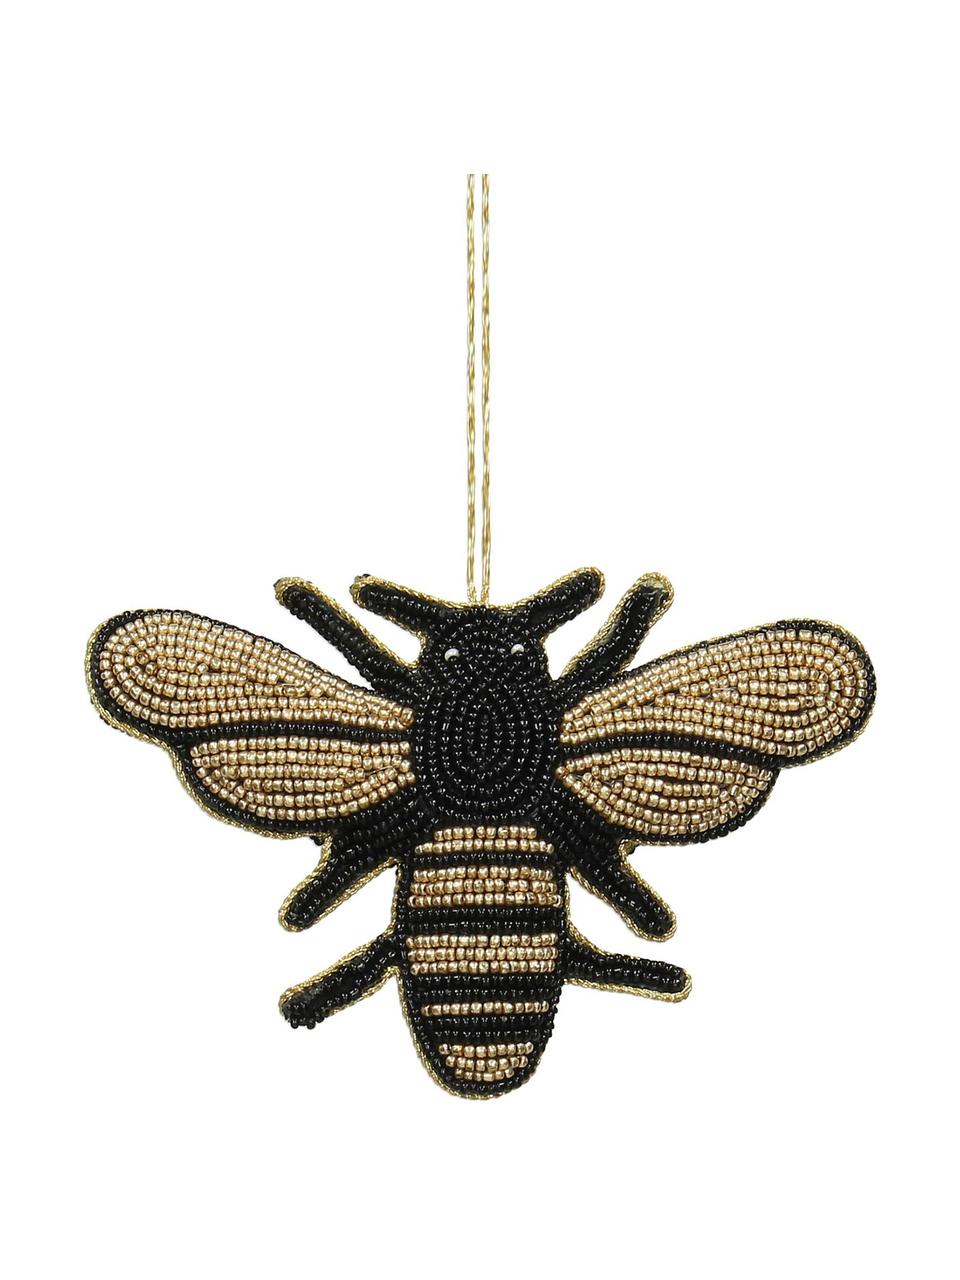 Baumanhänger Bee, 2 Stück, Goldfarben, Schwarz, 14 x 10 cm